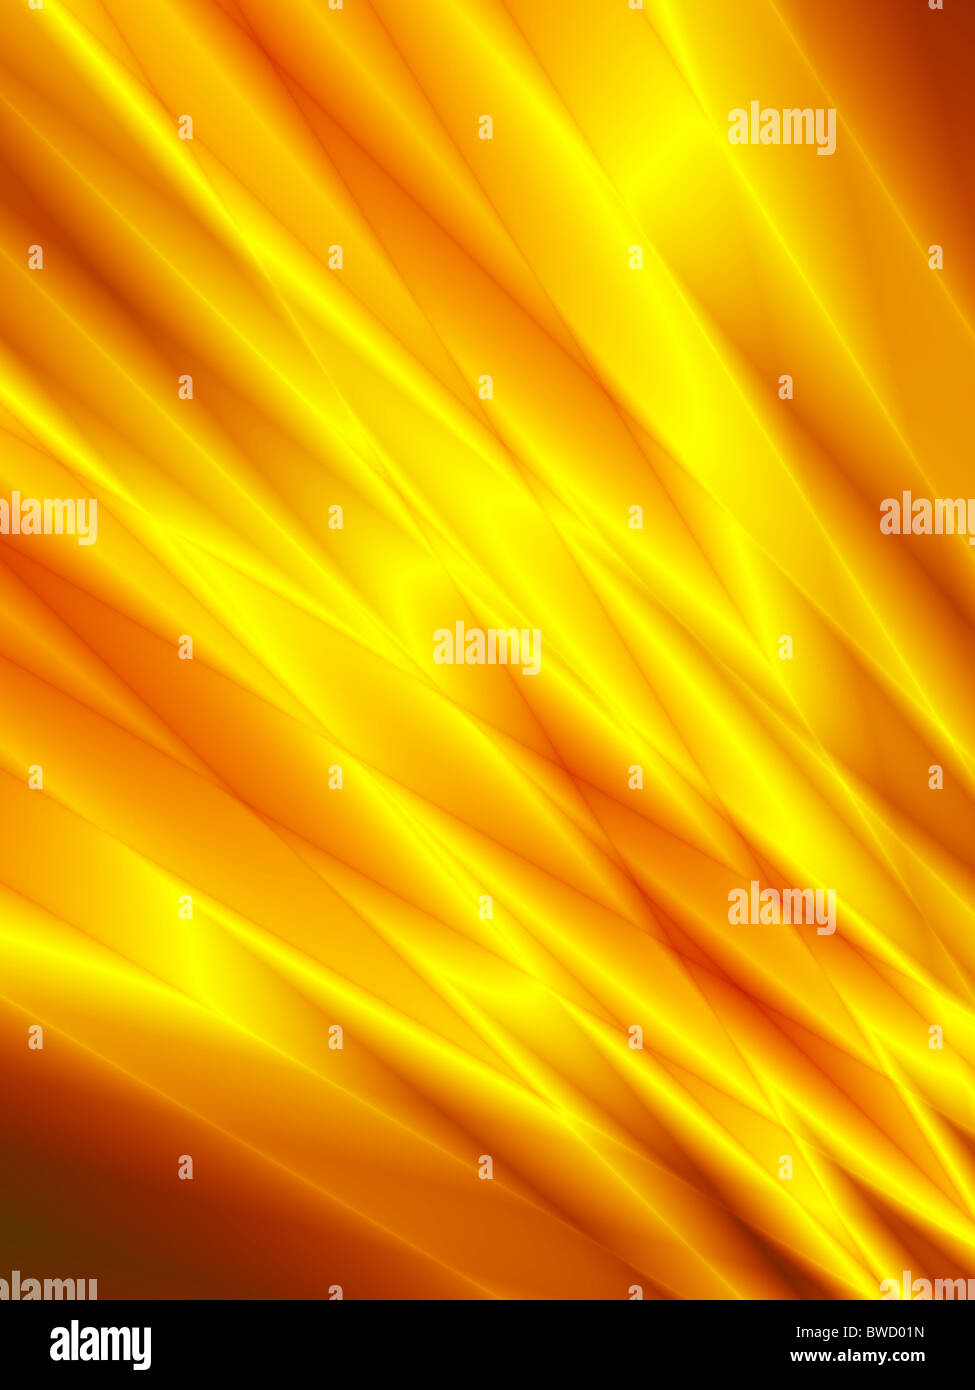 Shine yellow background Stock Photo - Alamy